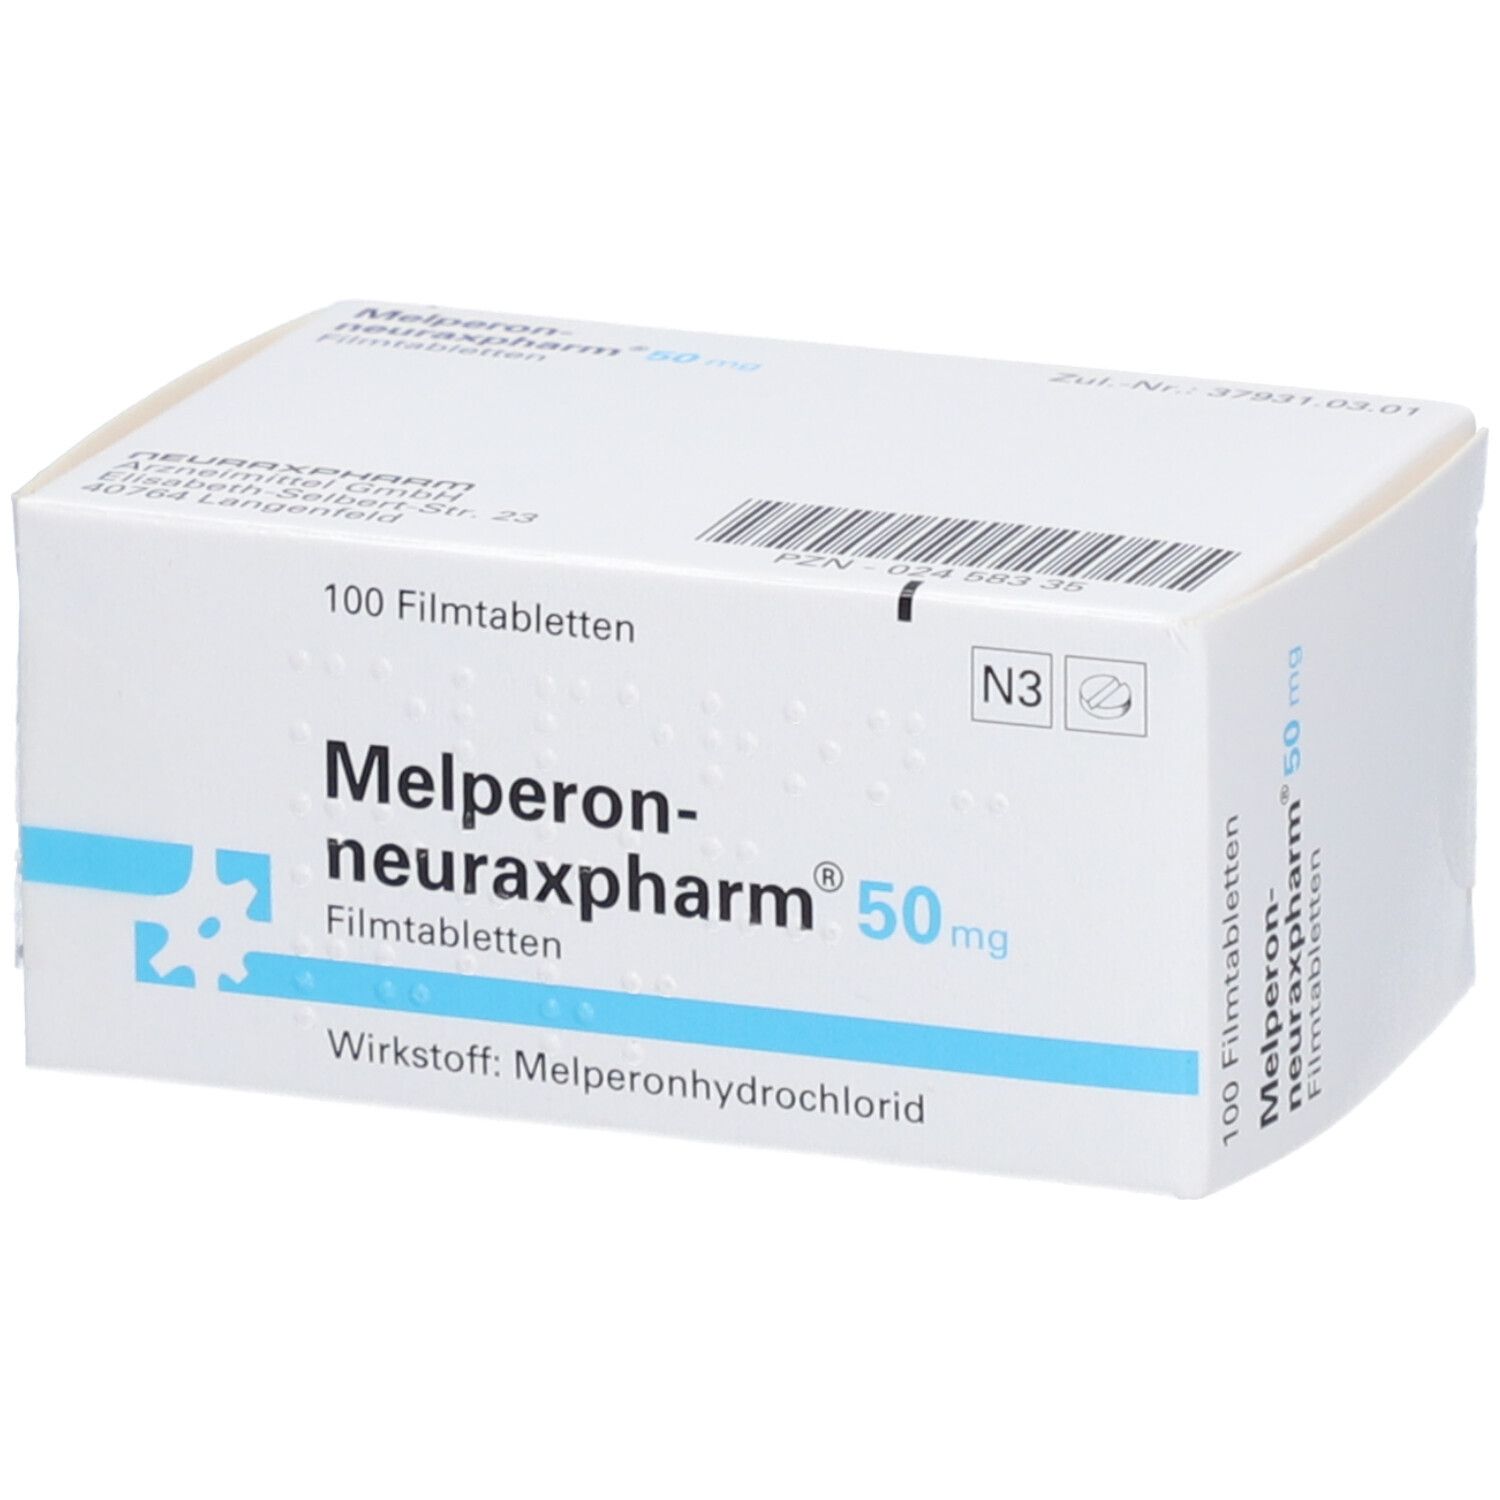 Melperon-neuraxpharm® 50 mg